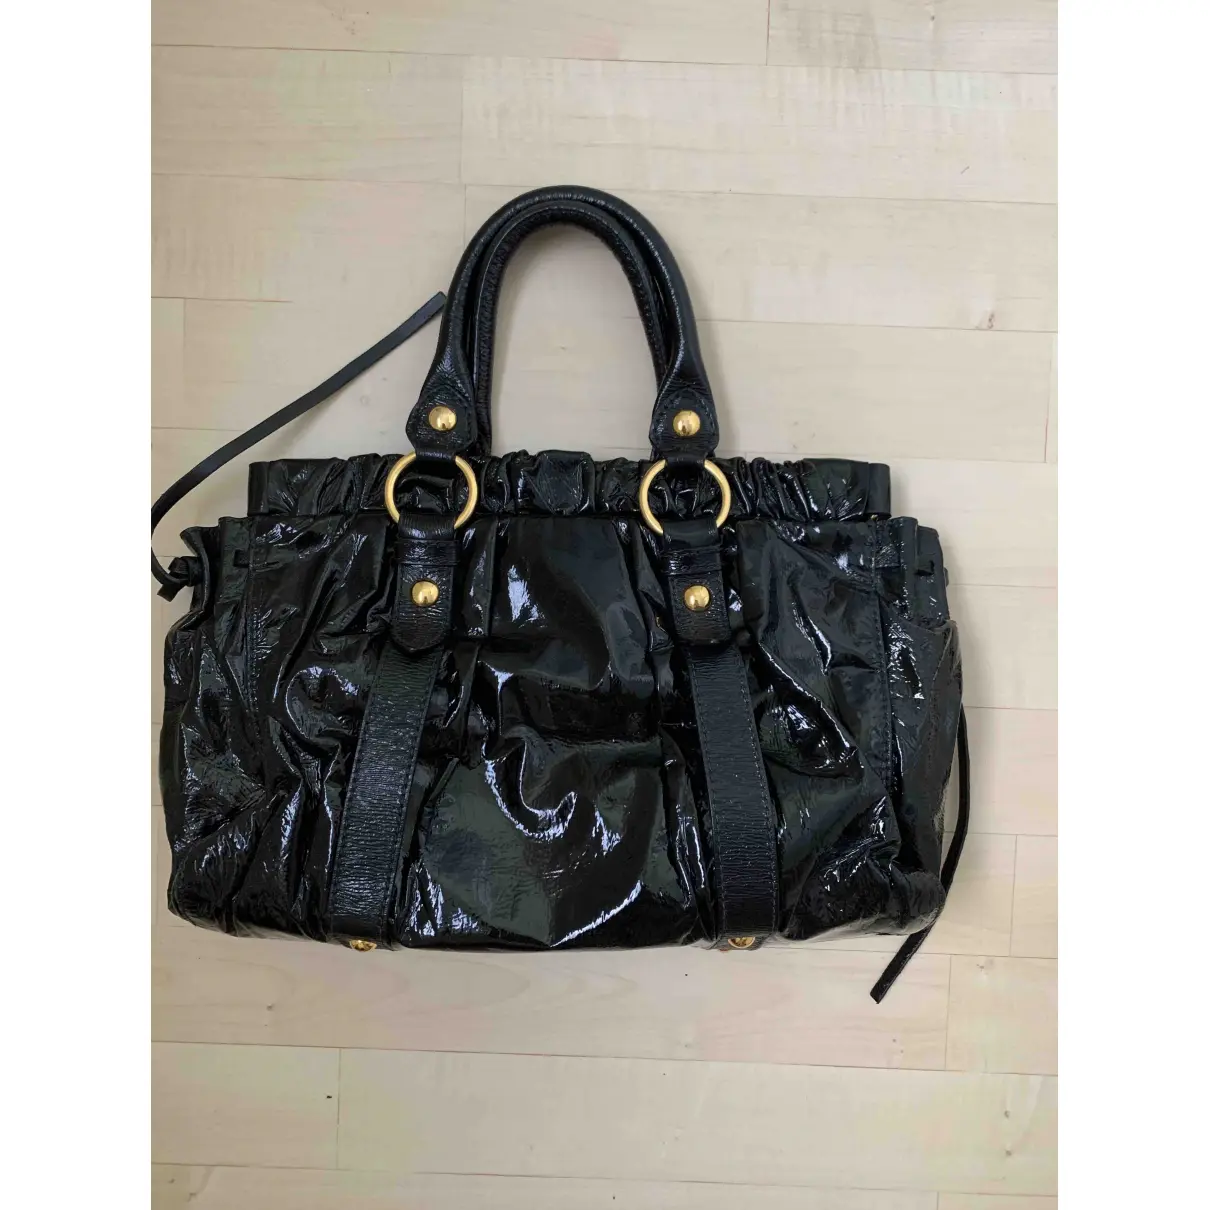 Buy Miu Miu Vitello patent leather handbag online